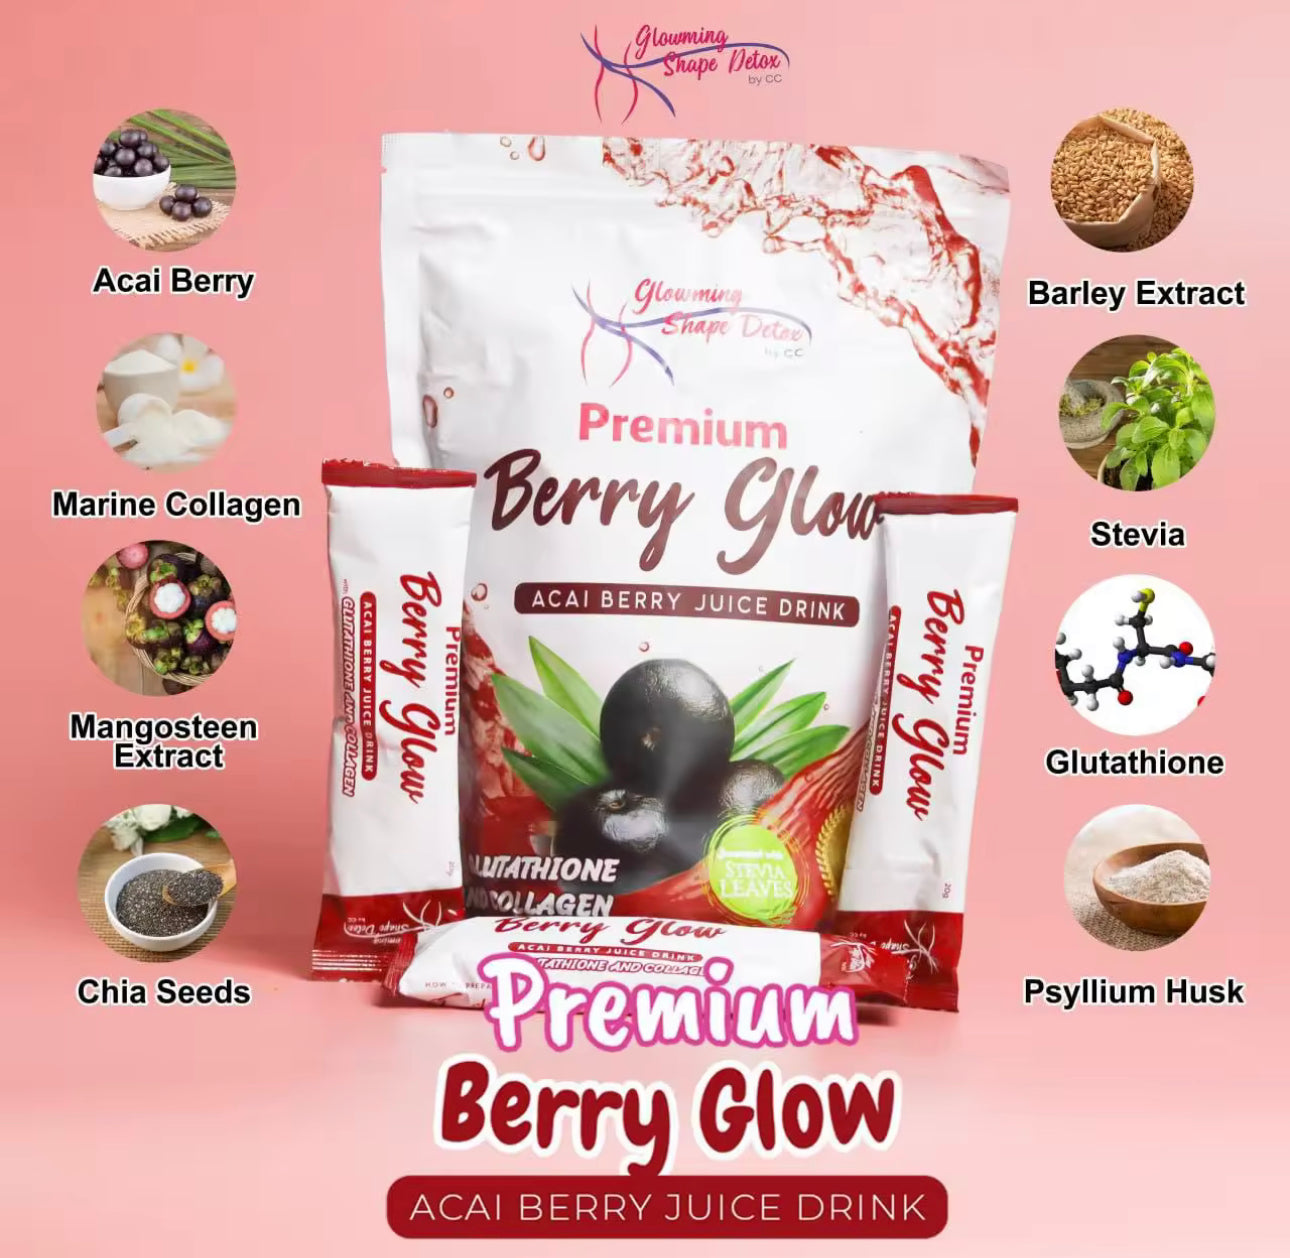 Glowming Shape Detox Acai Berry and Coffee Shape by Cris Cosmetics